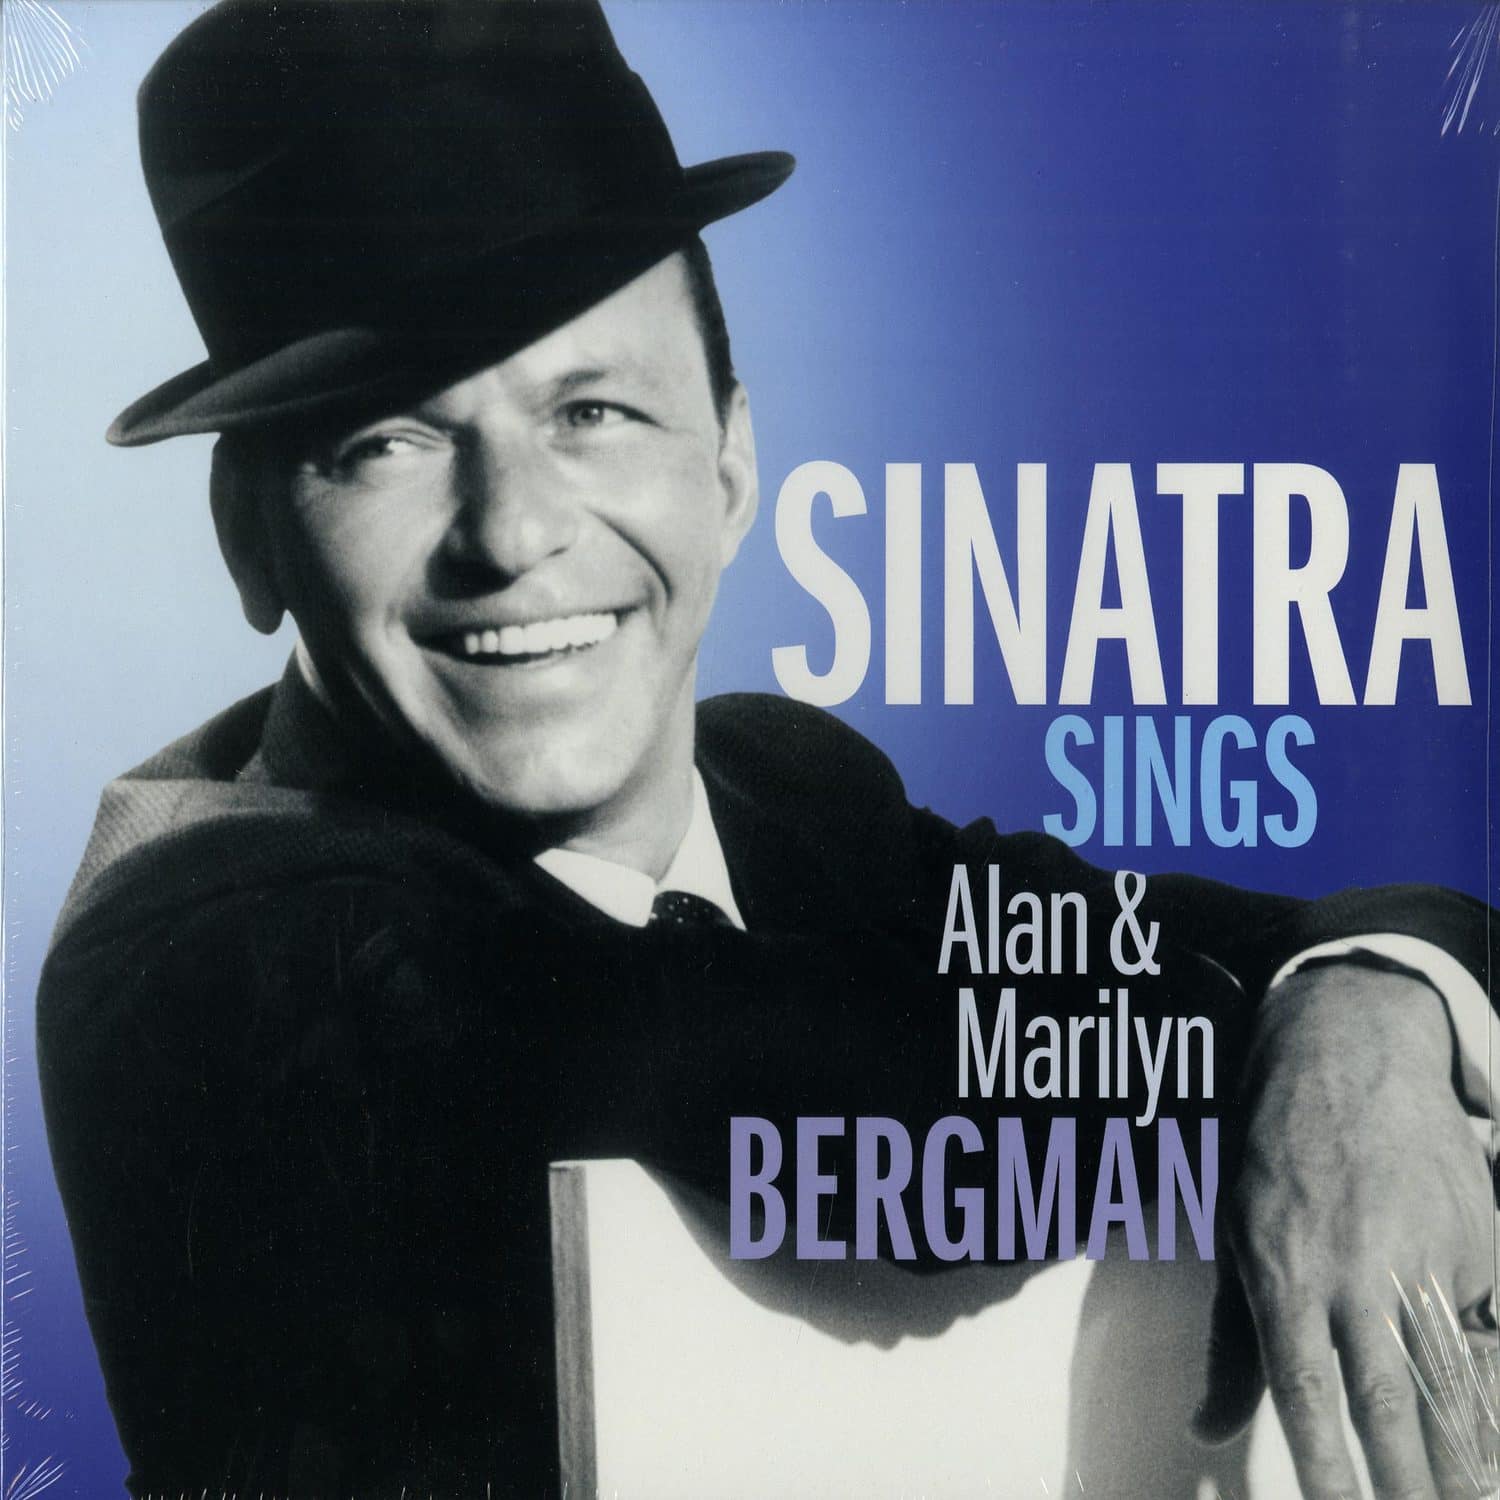 Frank Sinatra - SINATRA SINGS ALAN & MARILYN BERGMAN 